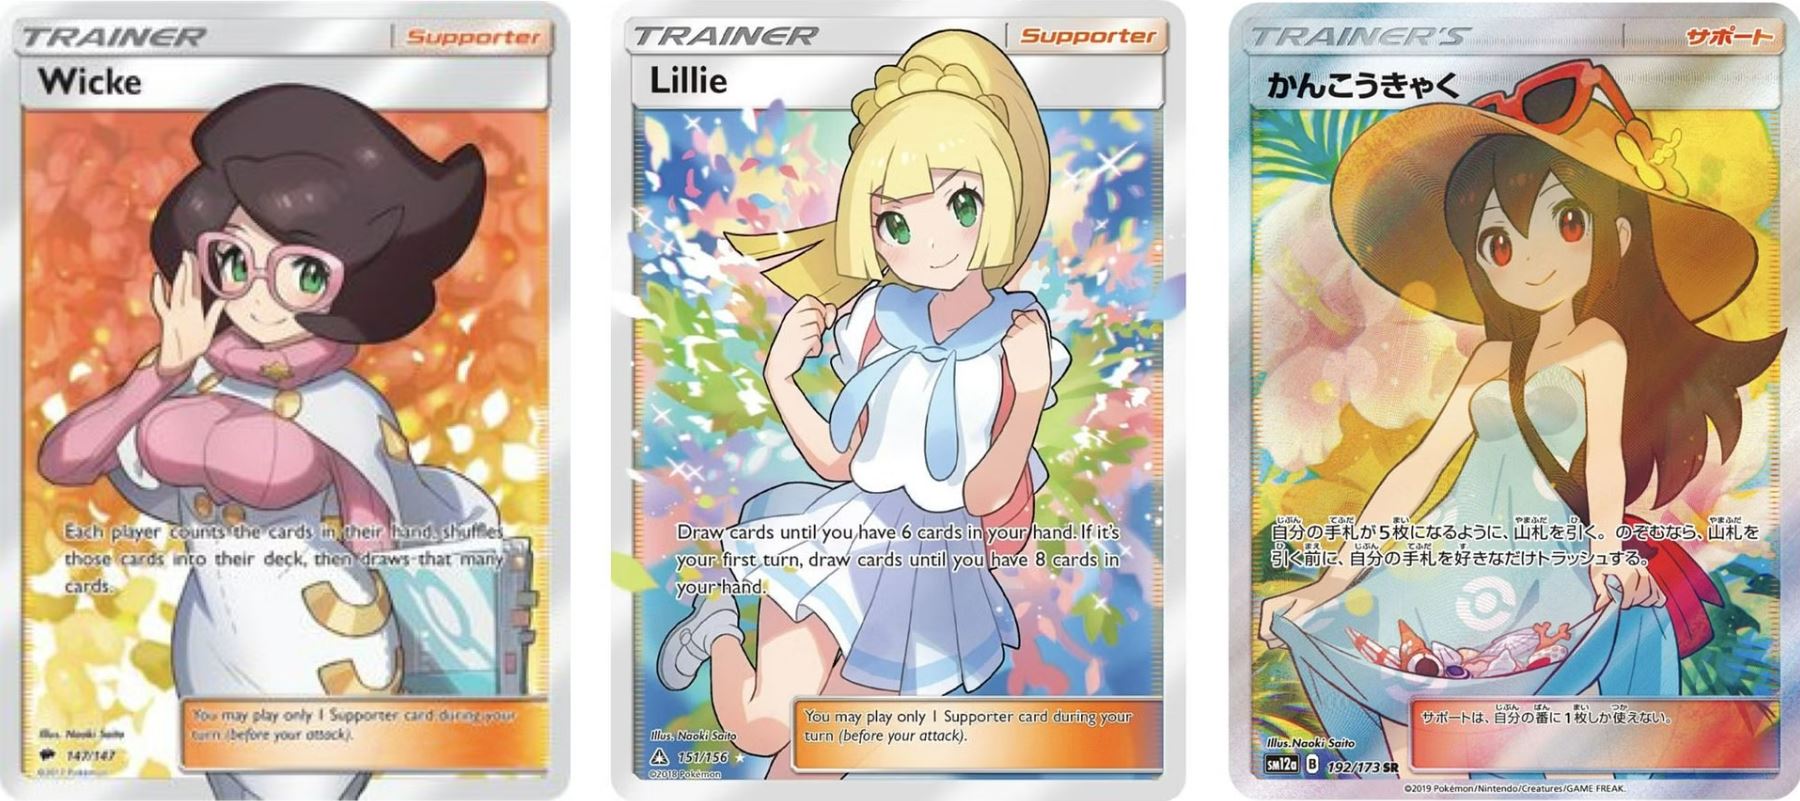 Pokémon Trading Card Game designs by Naoki Saito